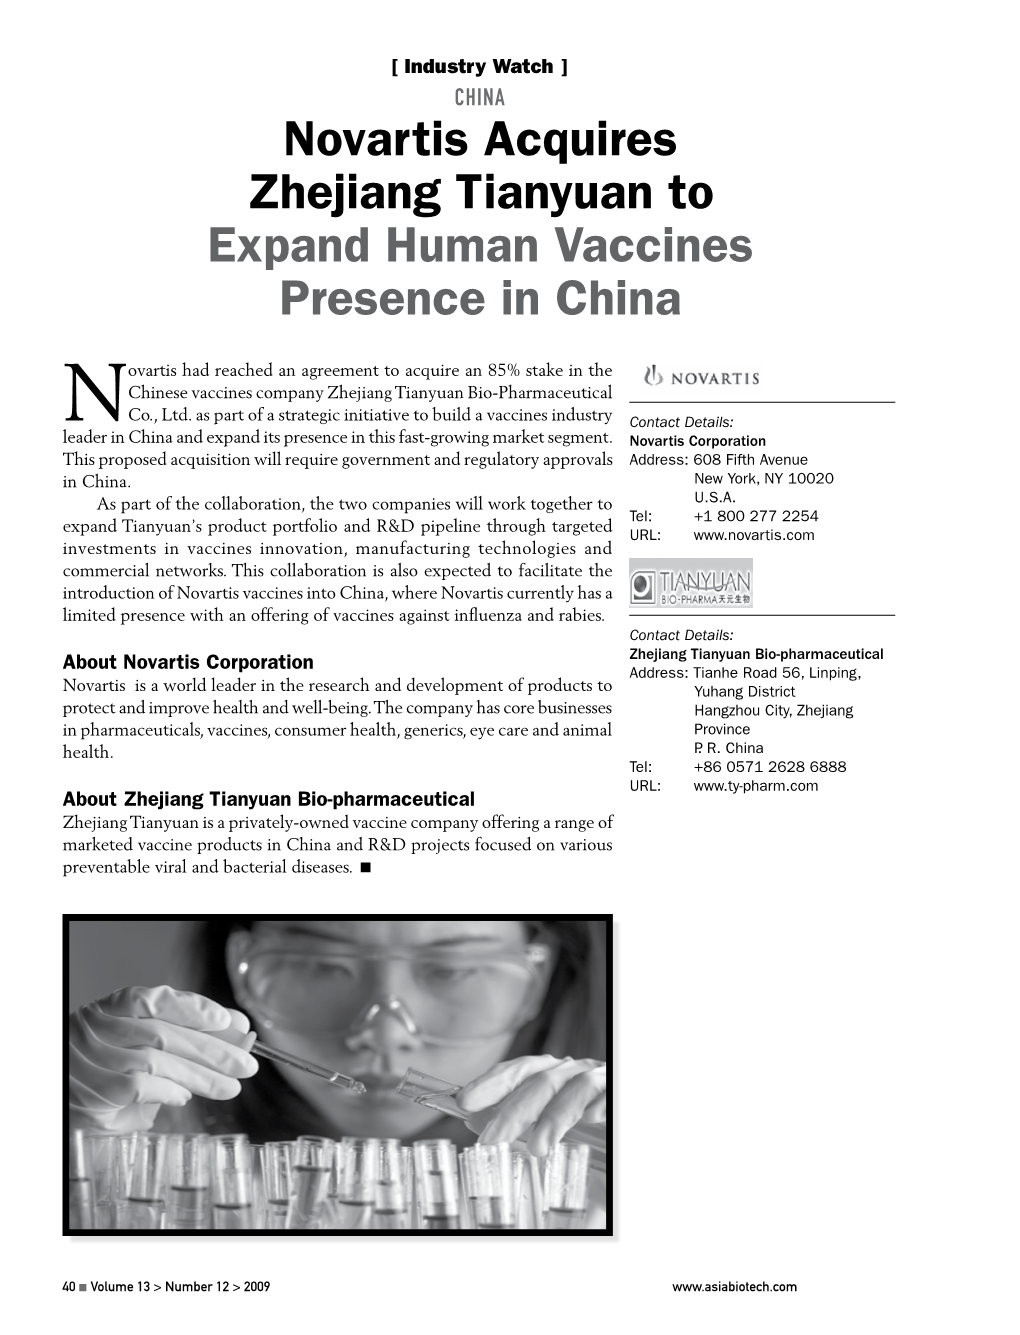 Novartis Acquires Zhejiang Tianyuan to Expand Human Vaccines Presence in China